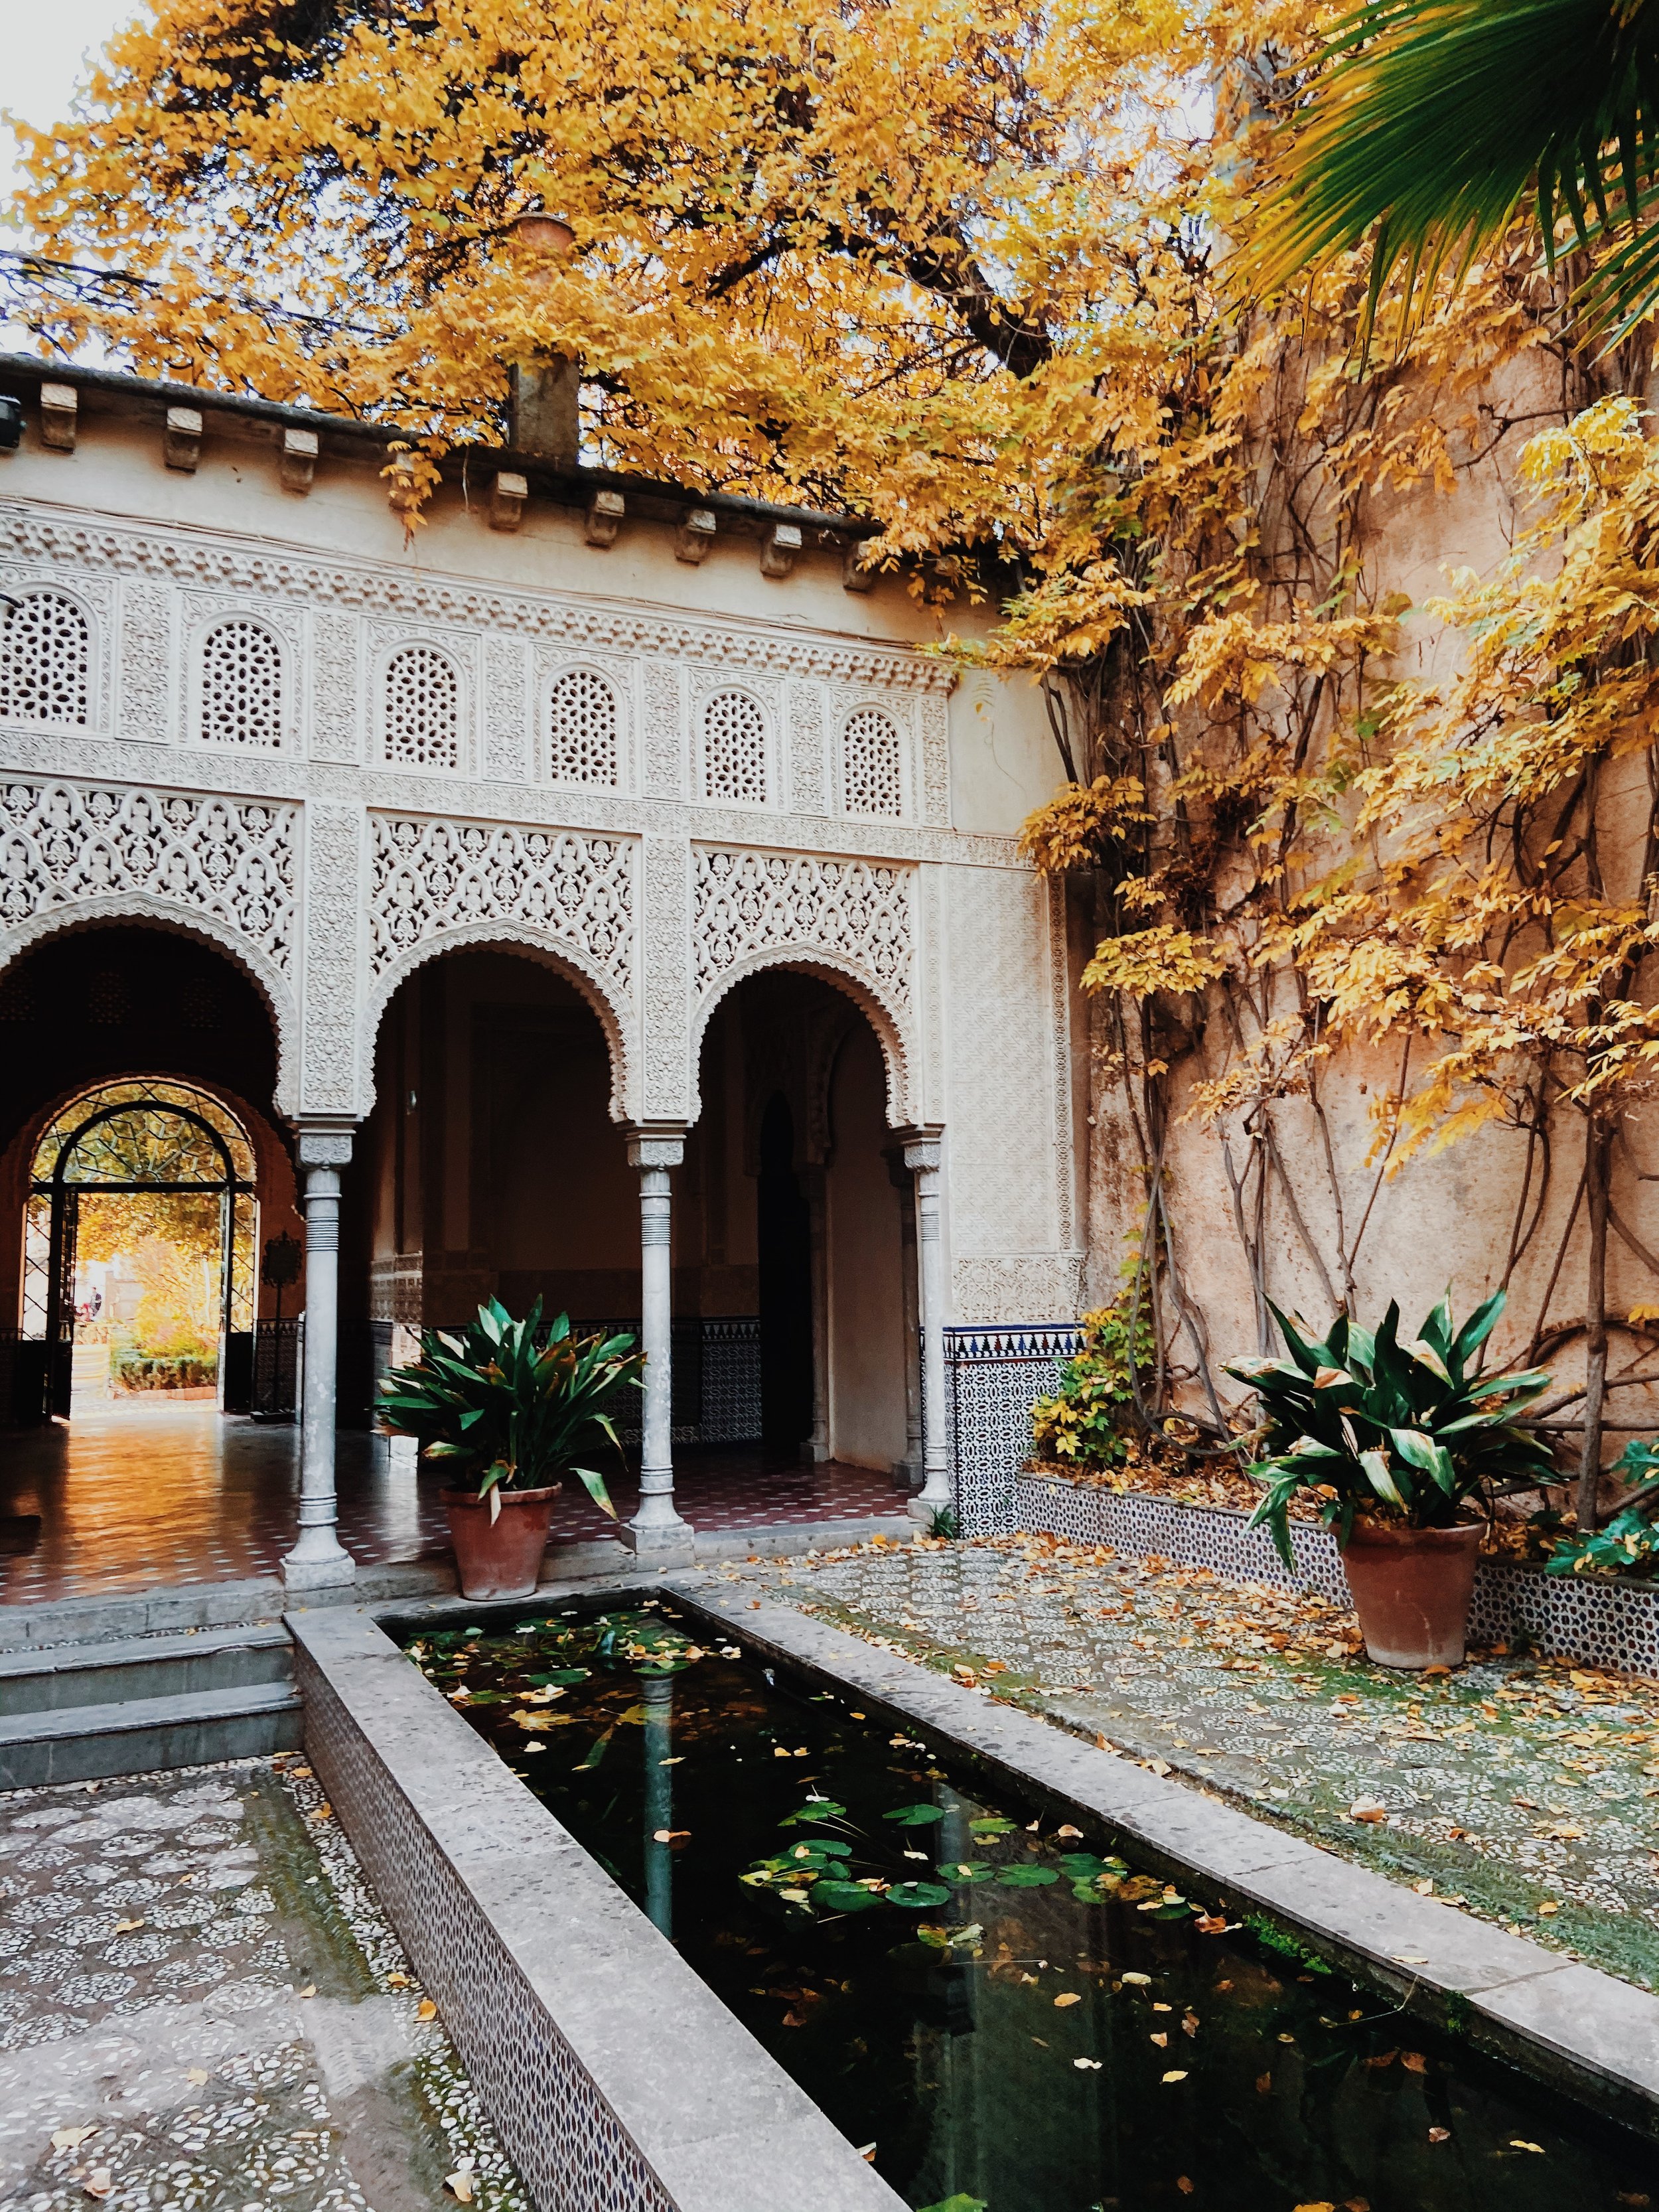 The Ultimate Travel Guide for Granada, Spain